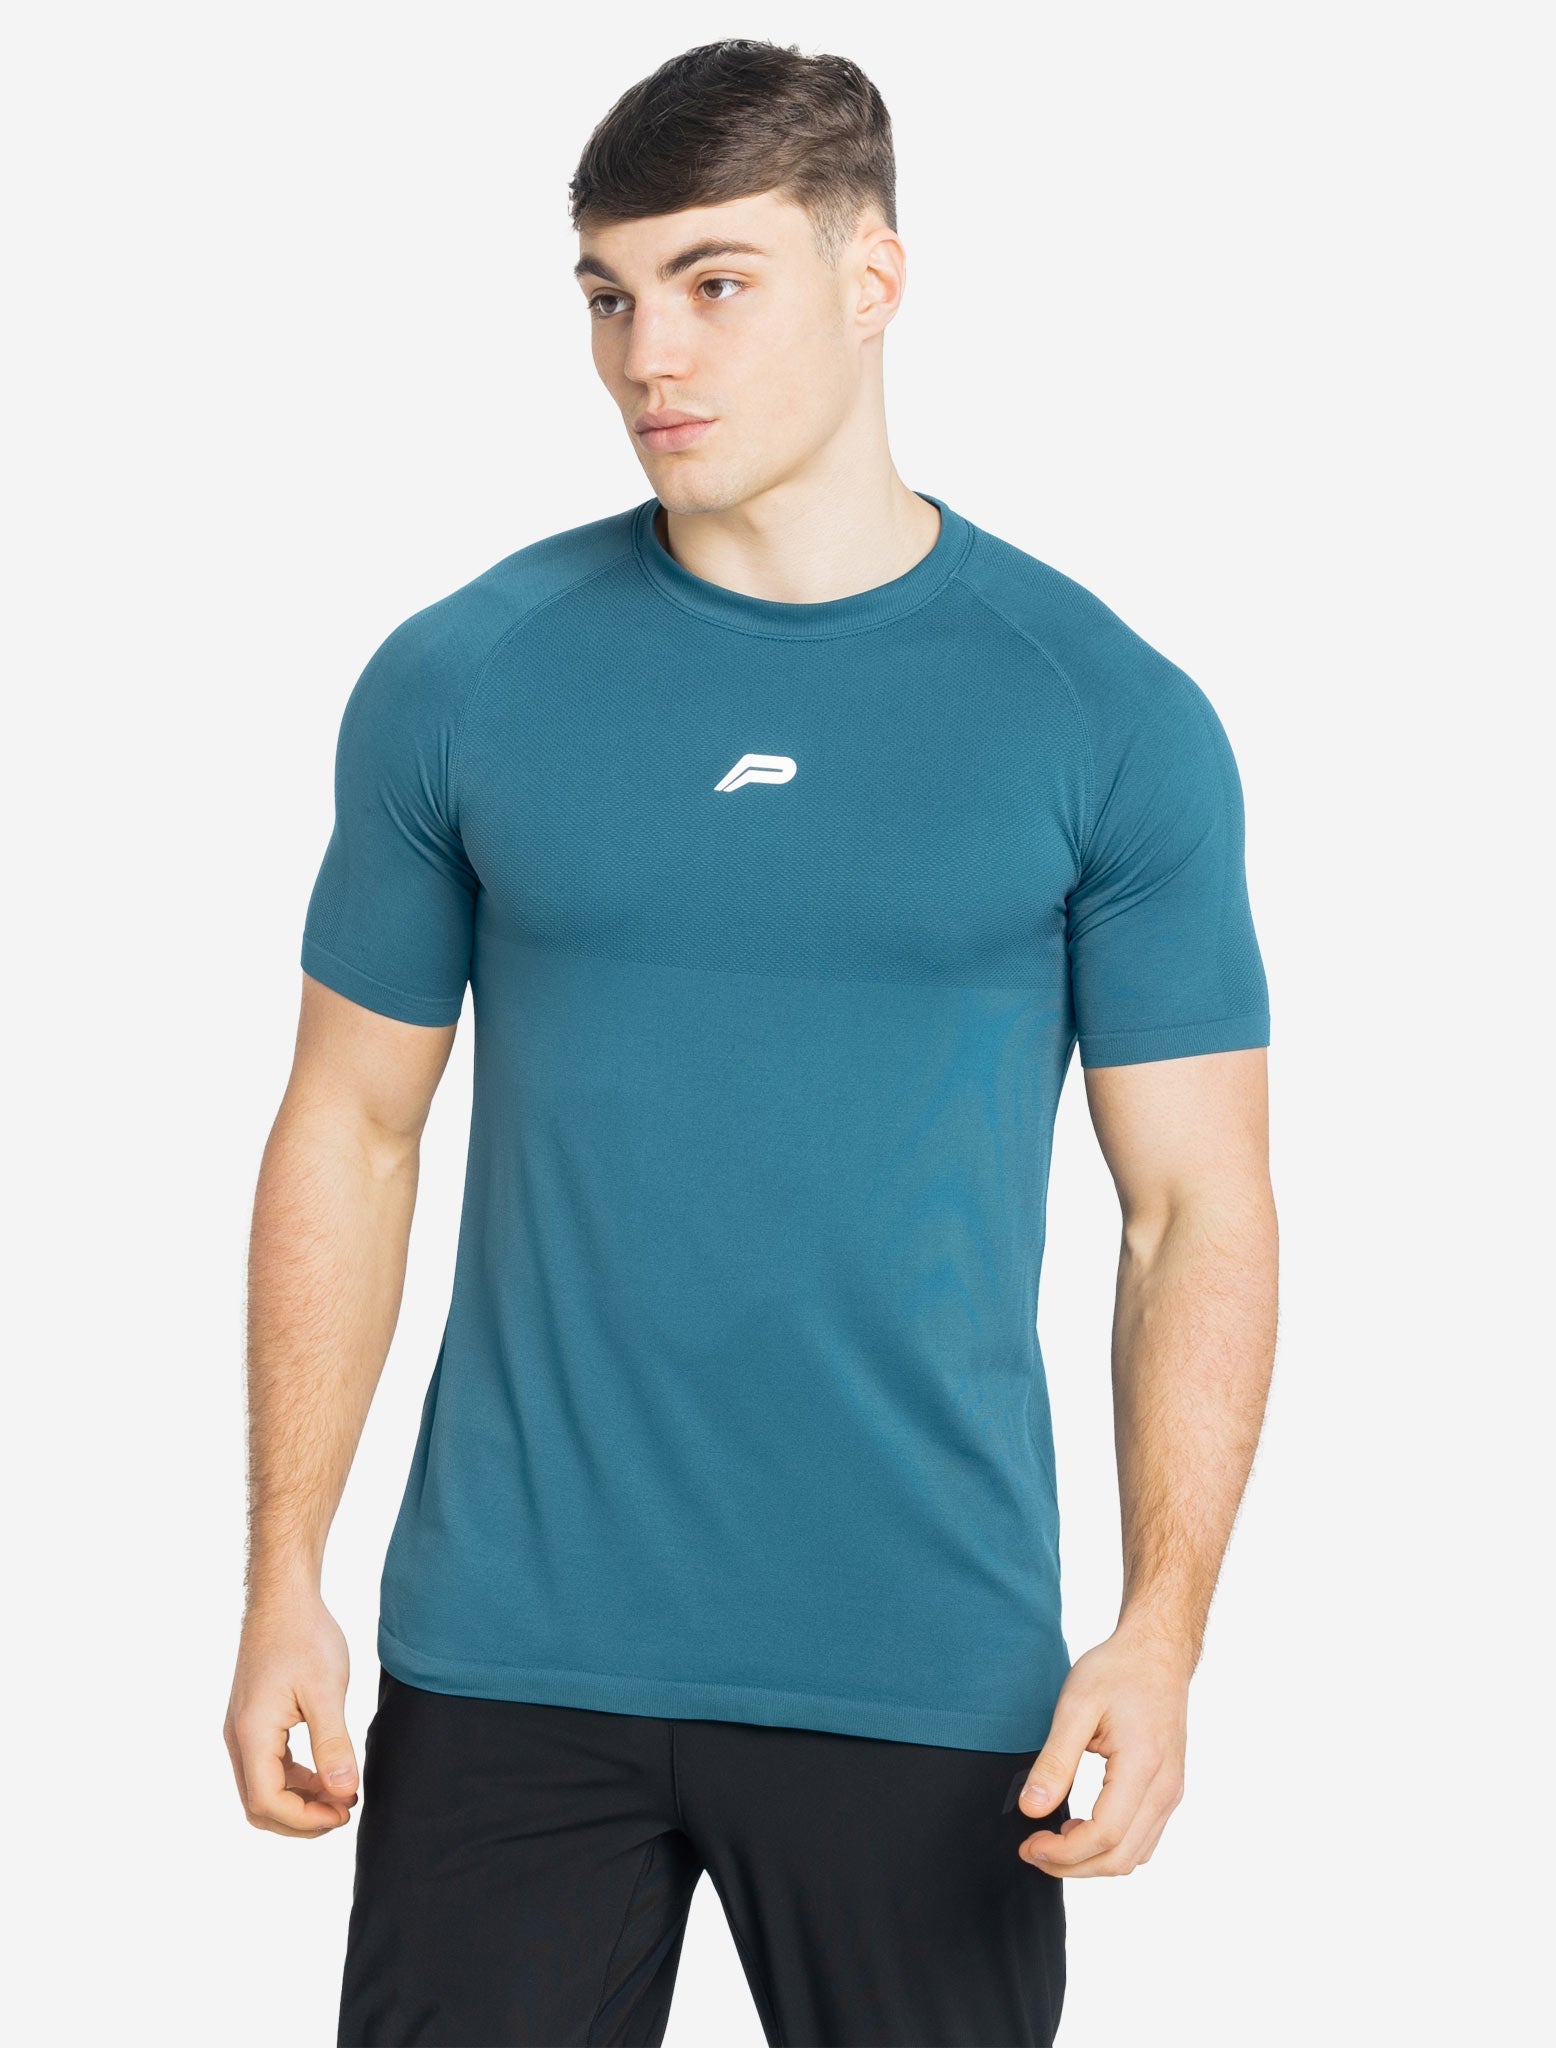 Seamless T-shirt / Teal Pursue Fitness 1